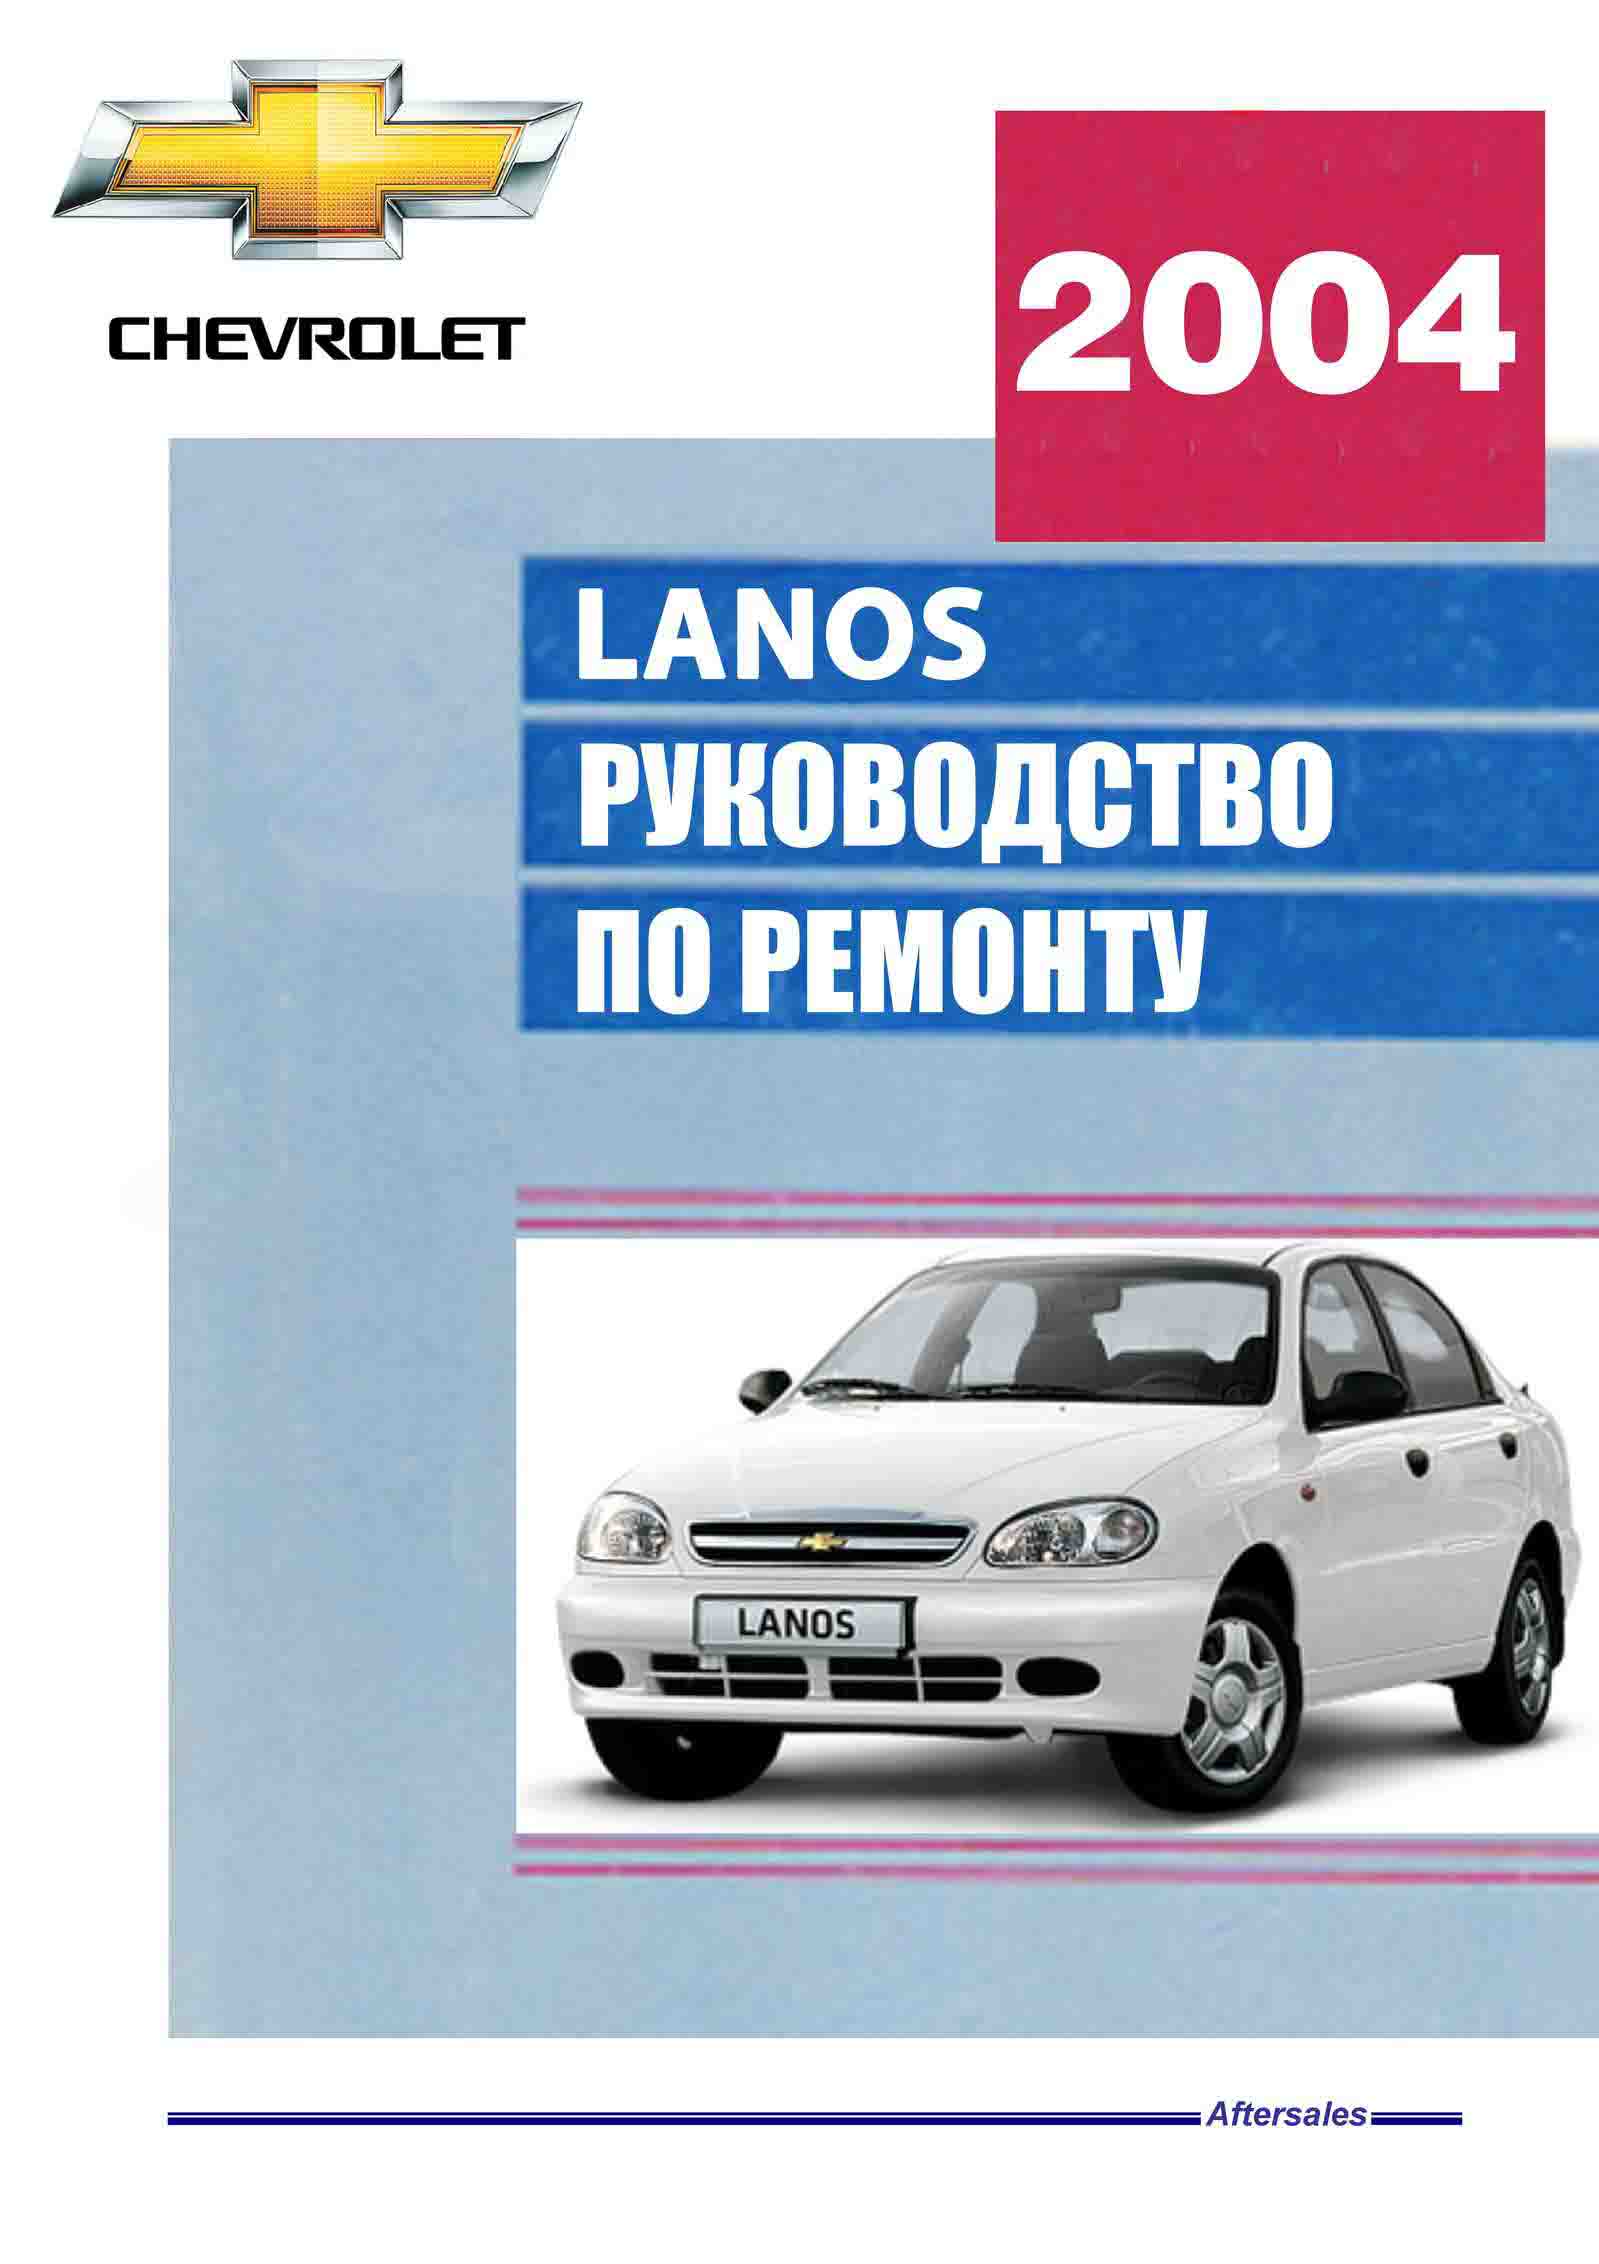 Daewoo zaz lanos chevrolet (ланос шевроле) с 2001 г, руководство по ремонту